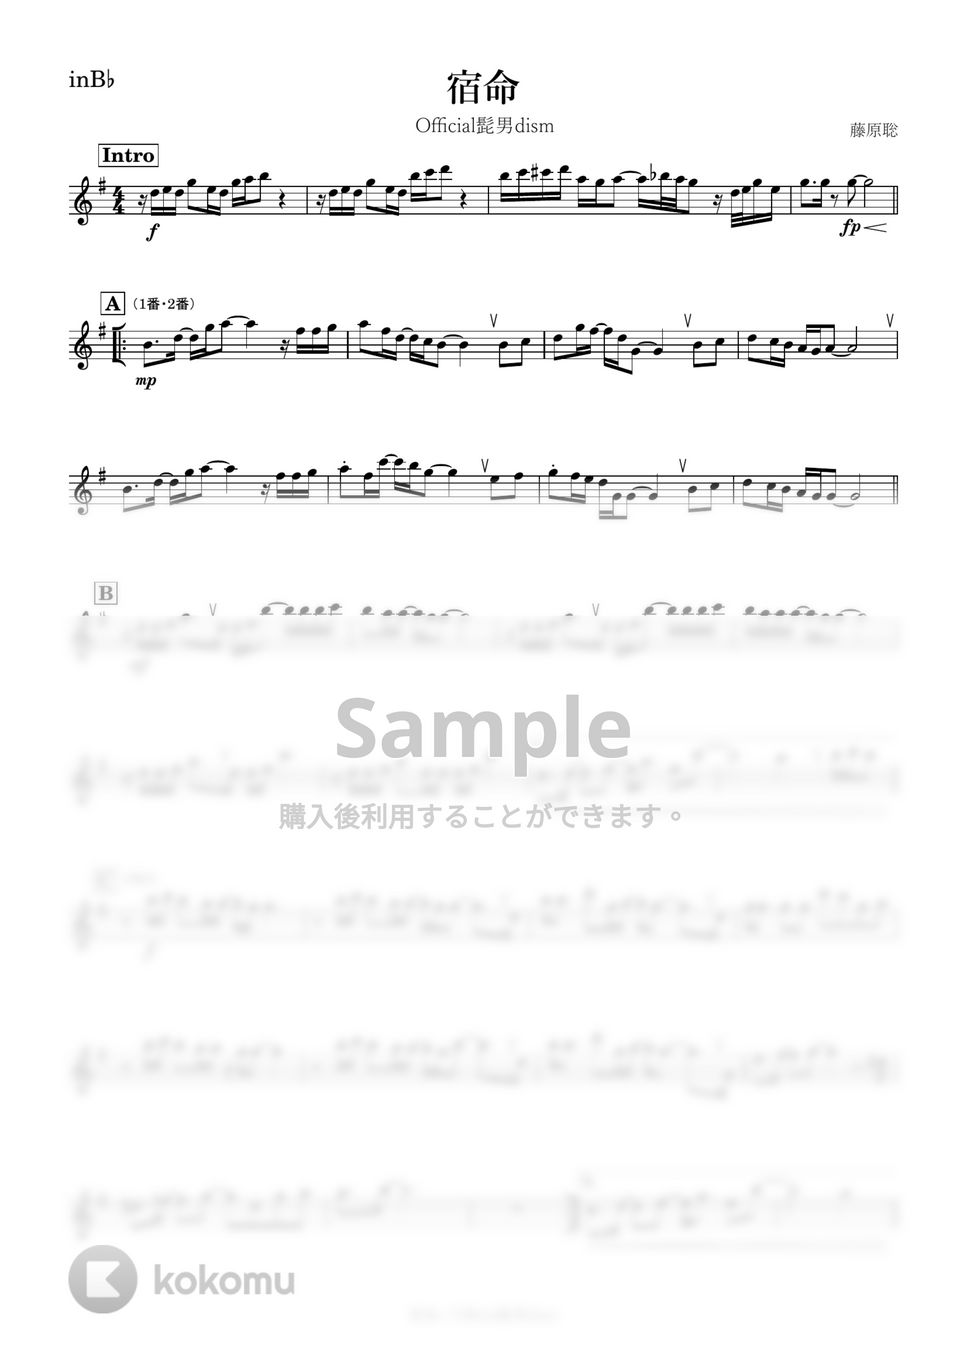 Official髭男dism - 宿命 (B♭) by kanamusic